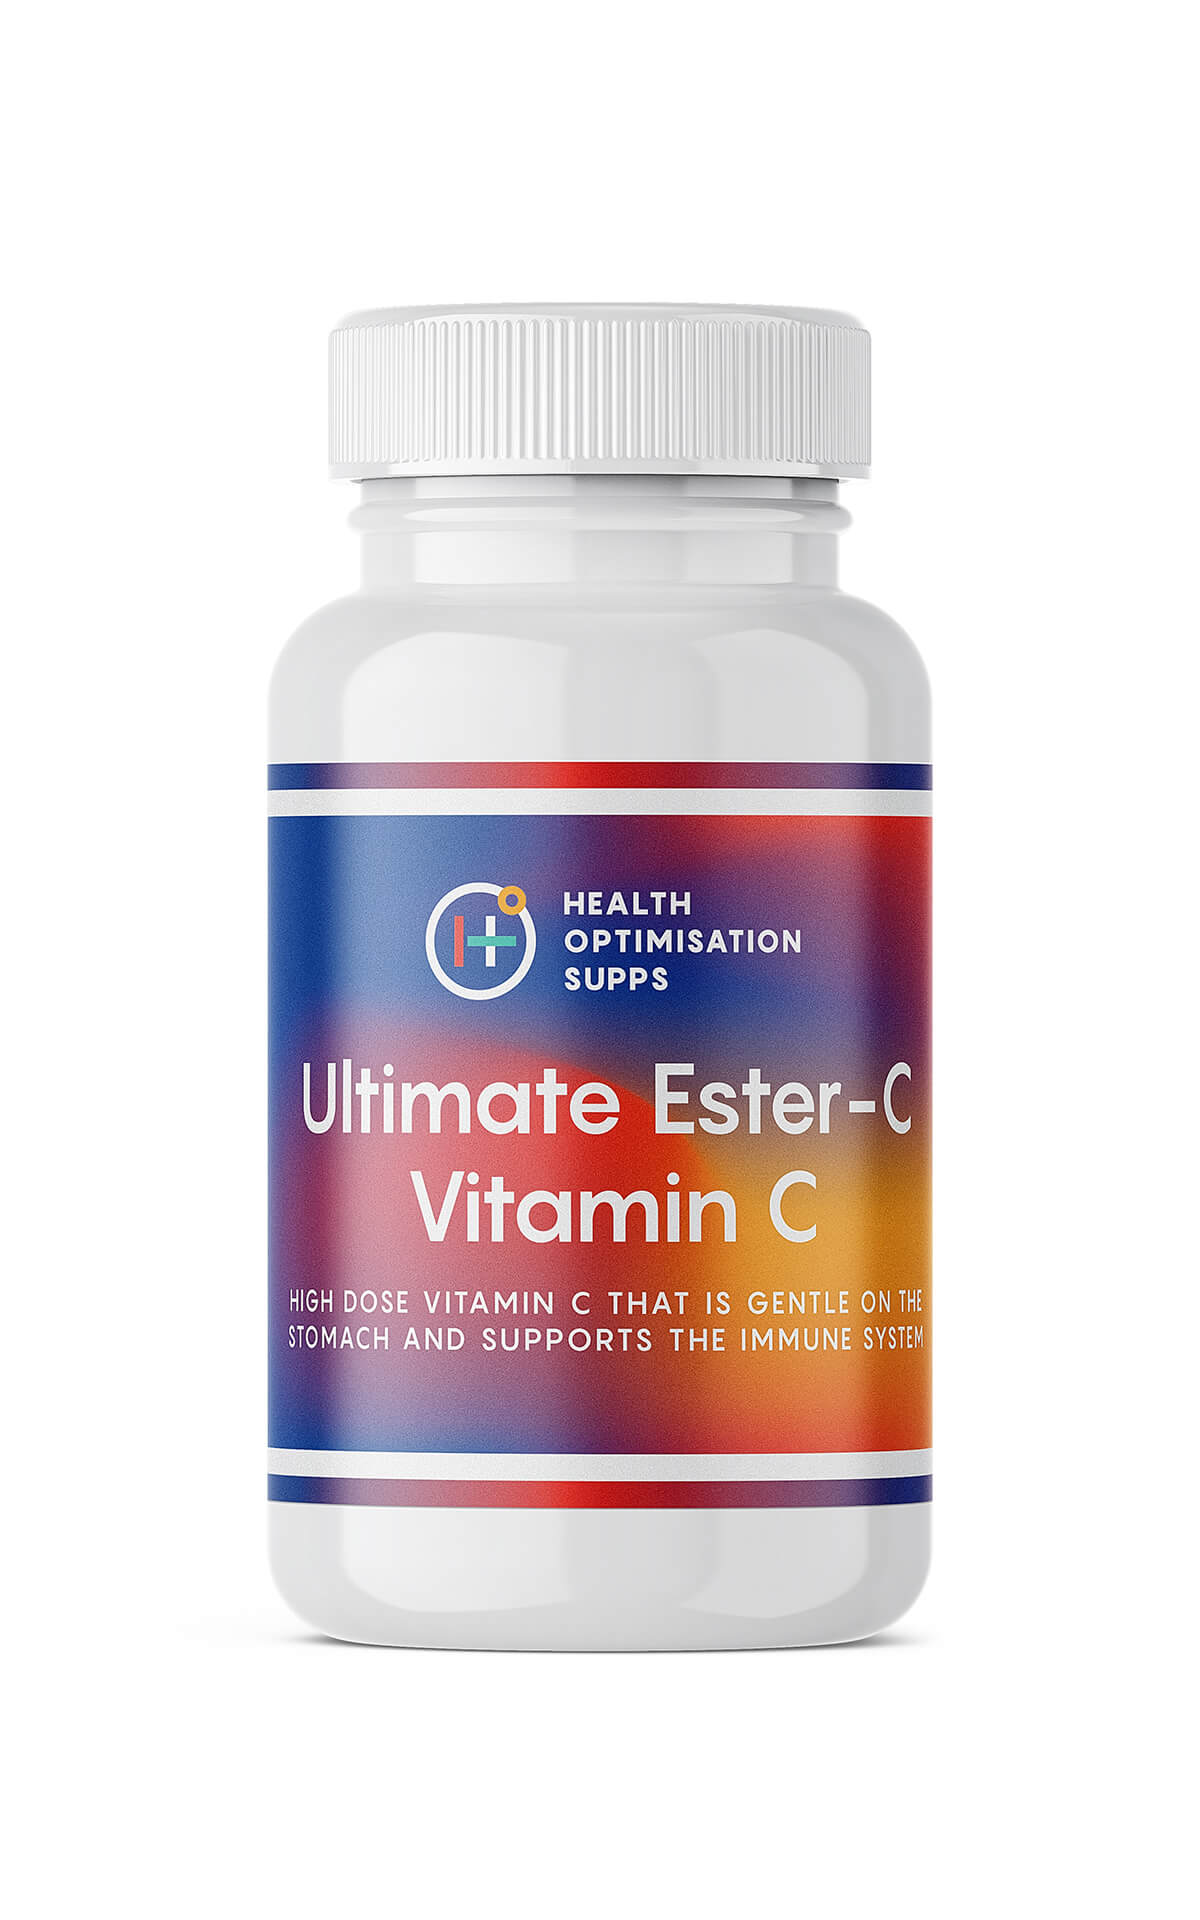 Ultimate Ester-C Vitamin C